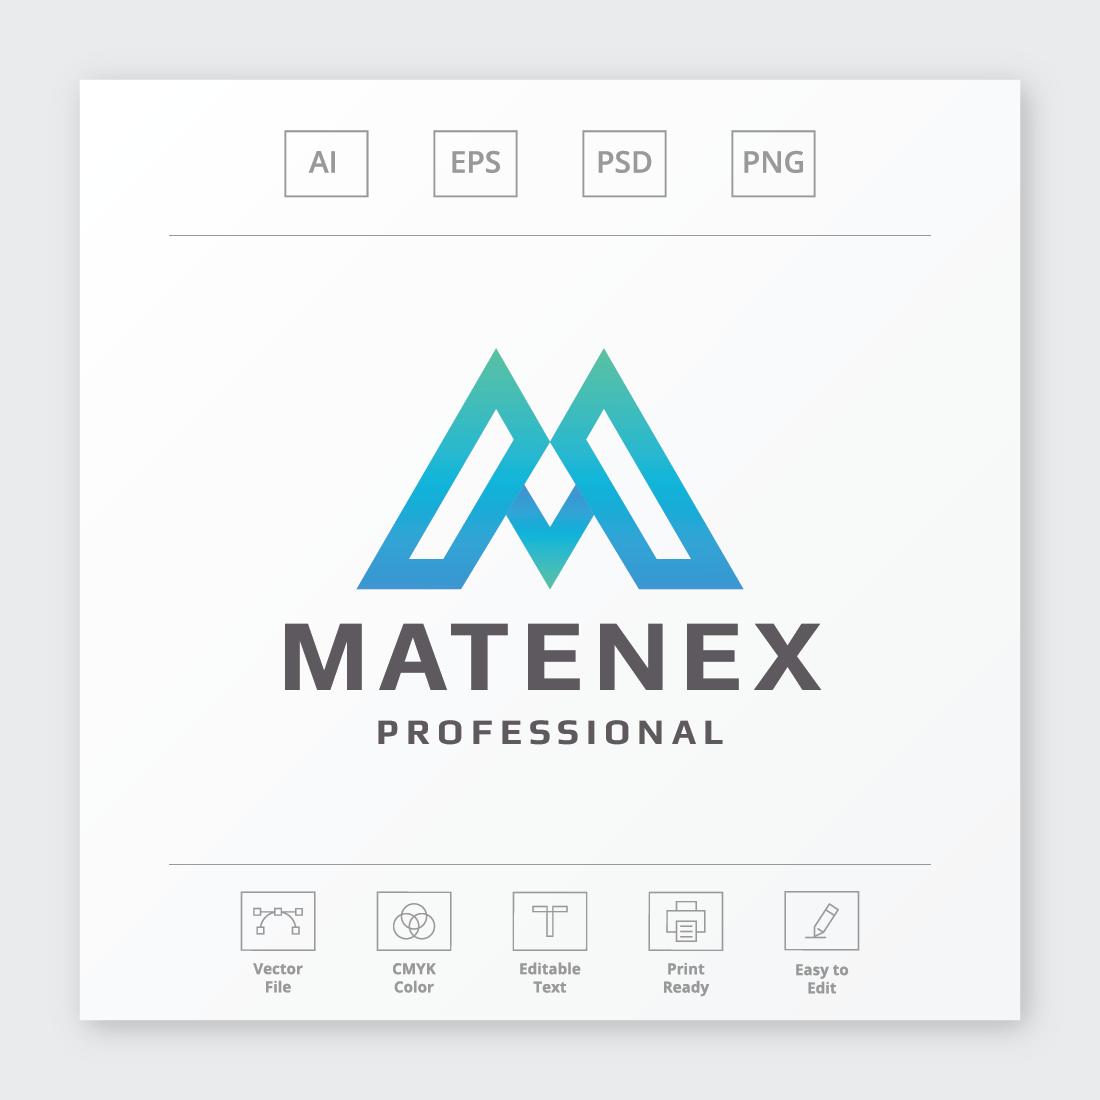 Matenex Letter M Logo cover image.